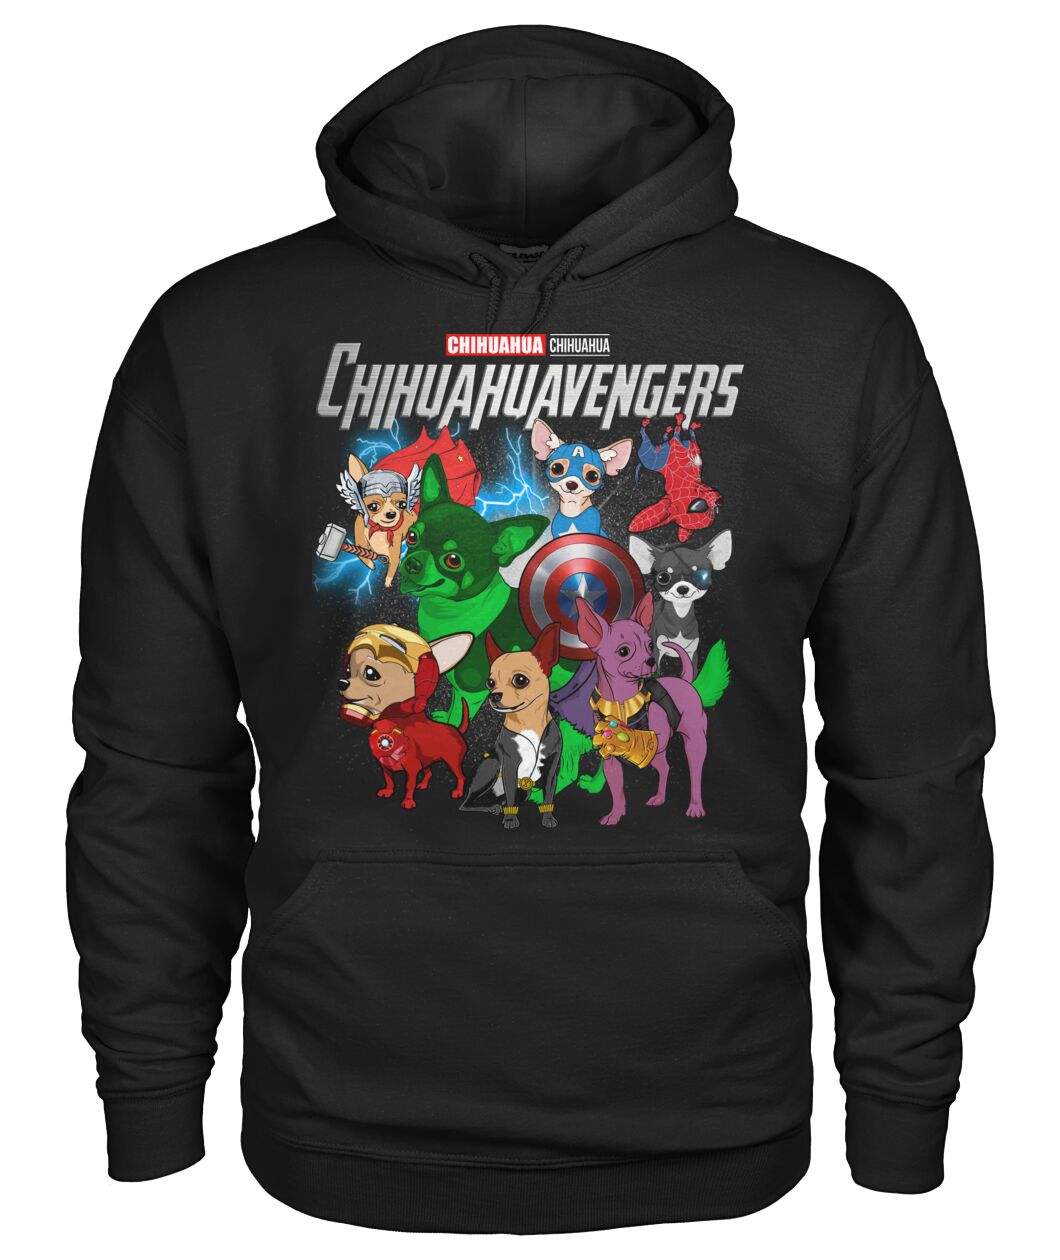 Chihuahuavengers 3D Hoodie, Shirt 9